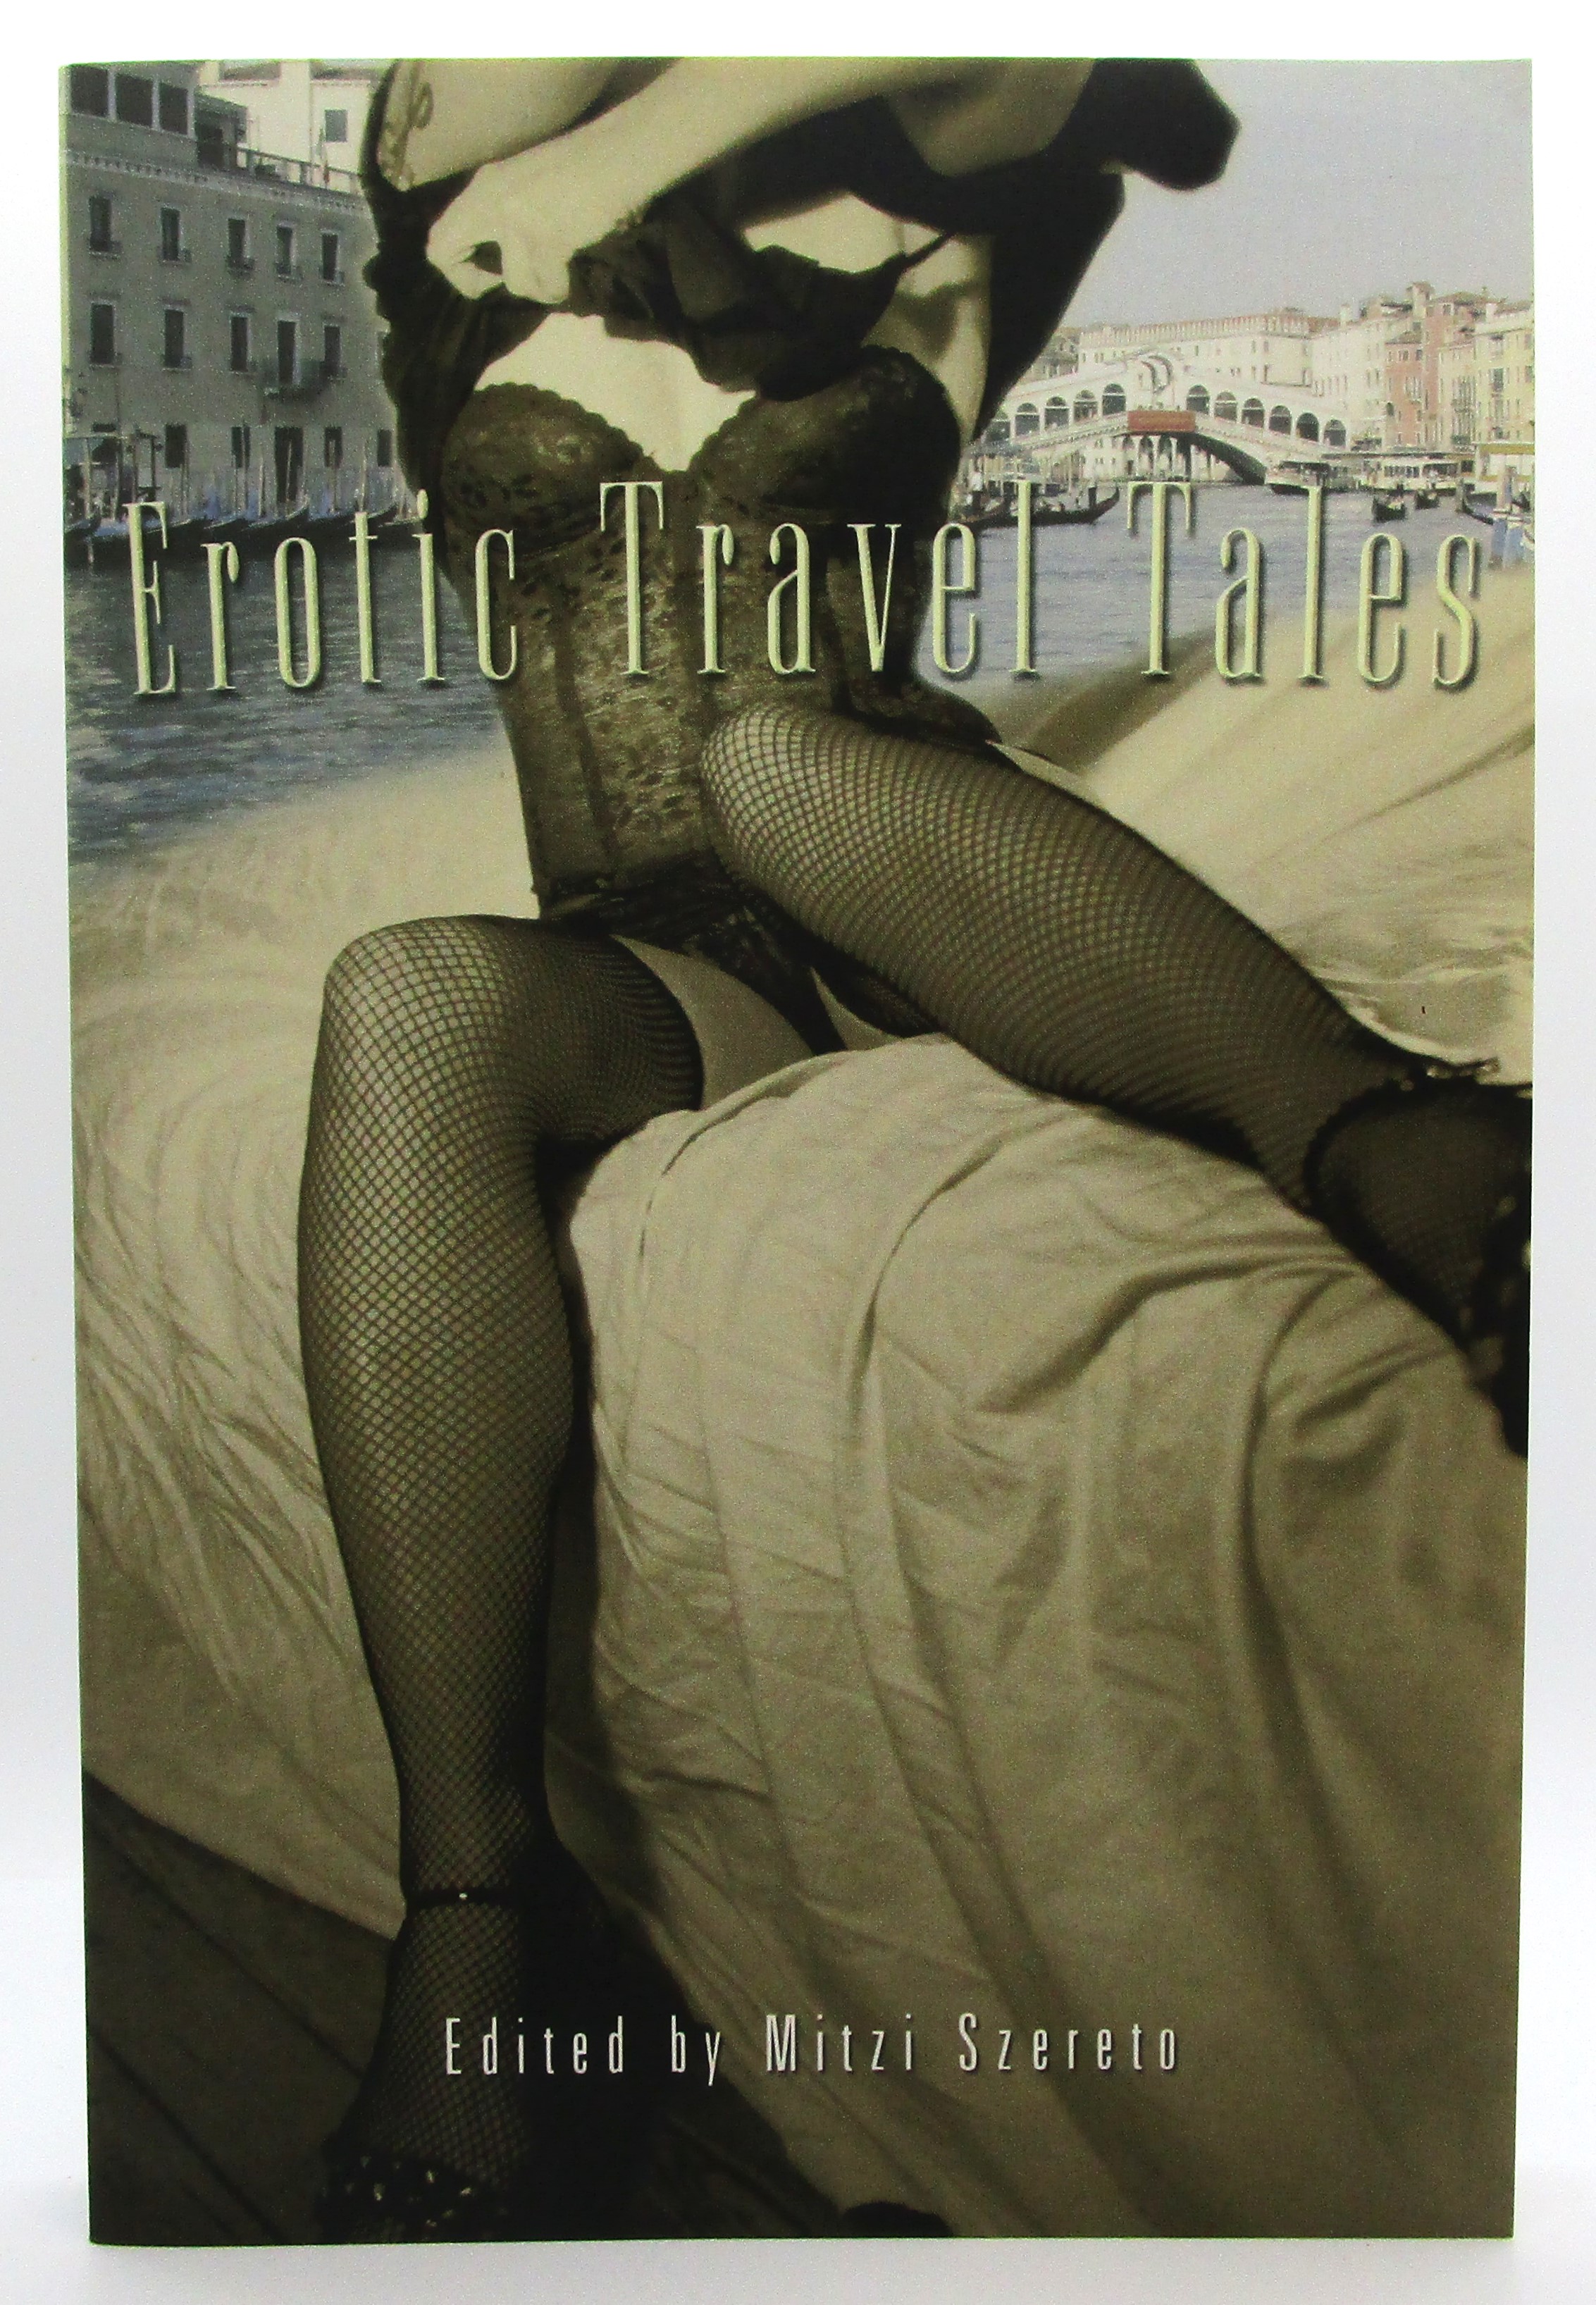 Travel erotic